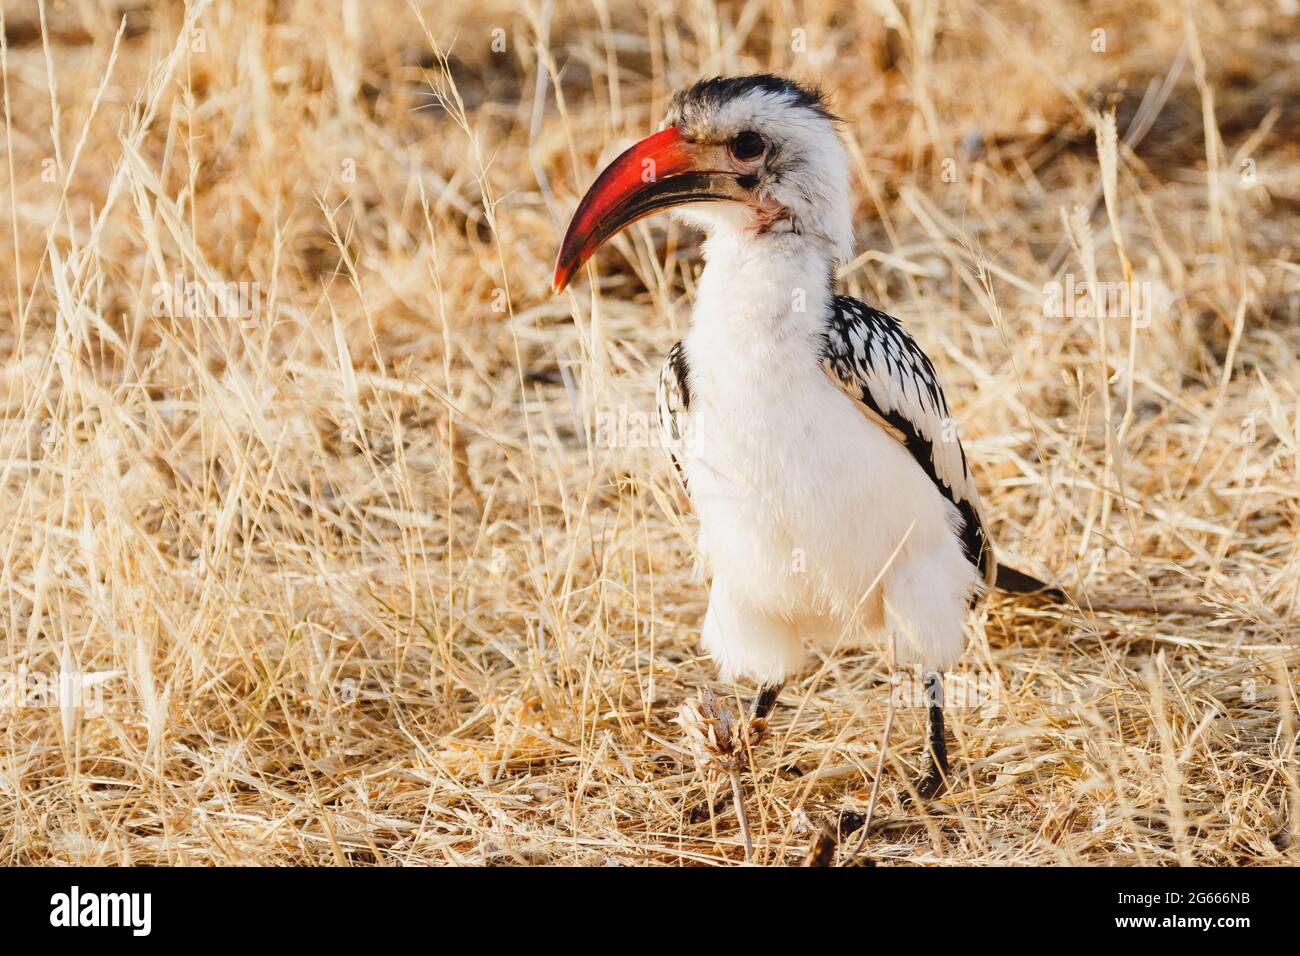 Animals in the wild - Red-billed Hornbill - Samburu National Reserve, North Kenya Stock Photo